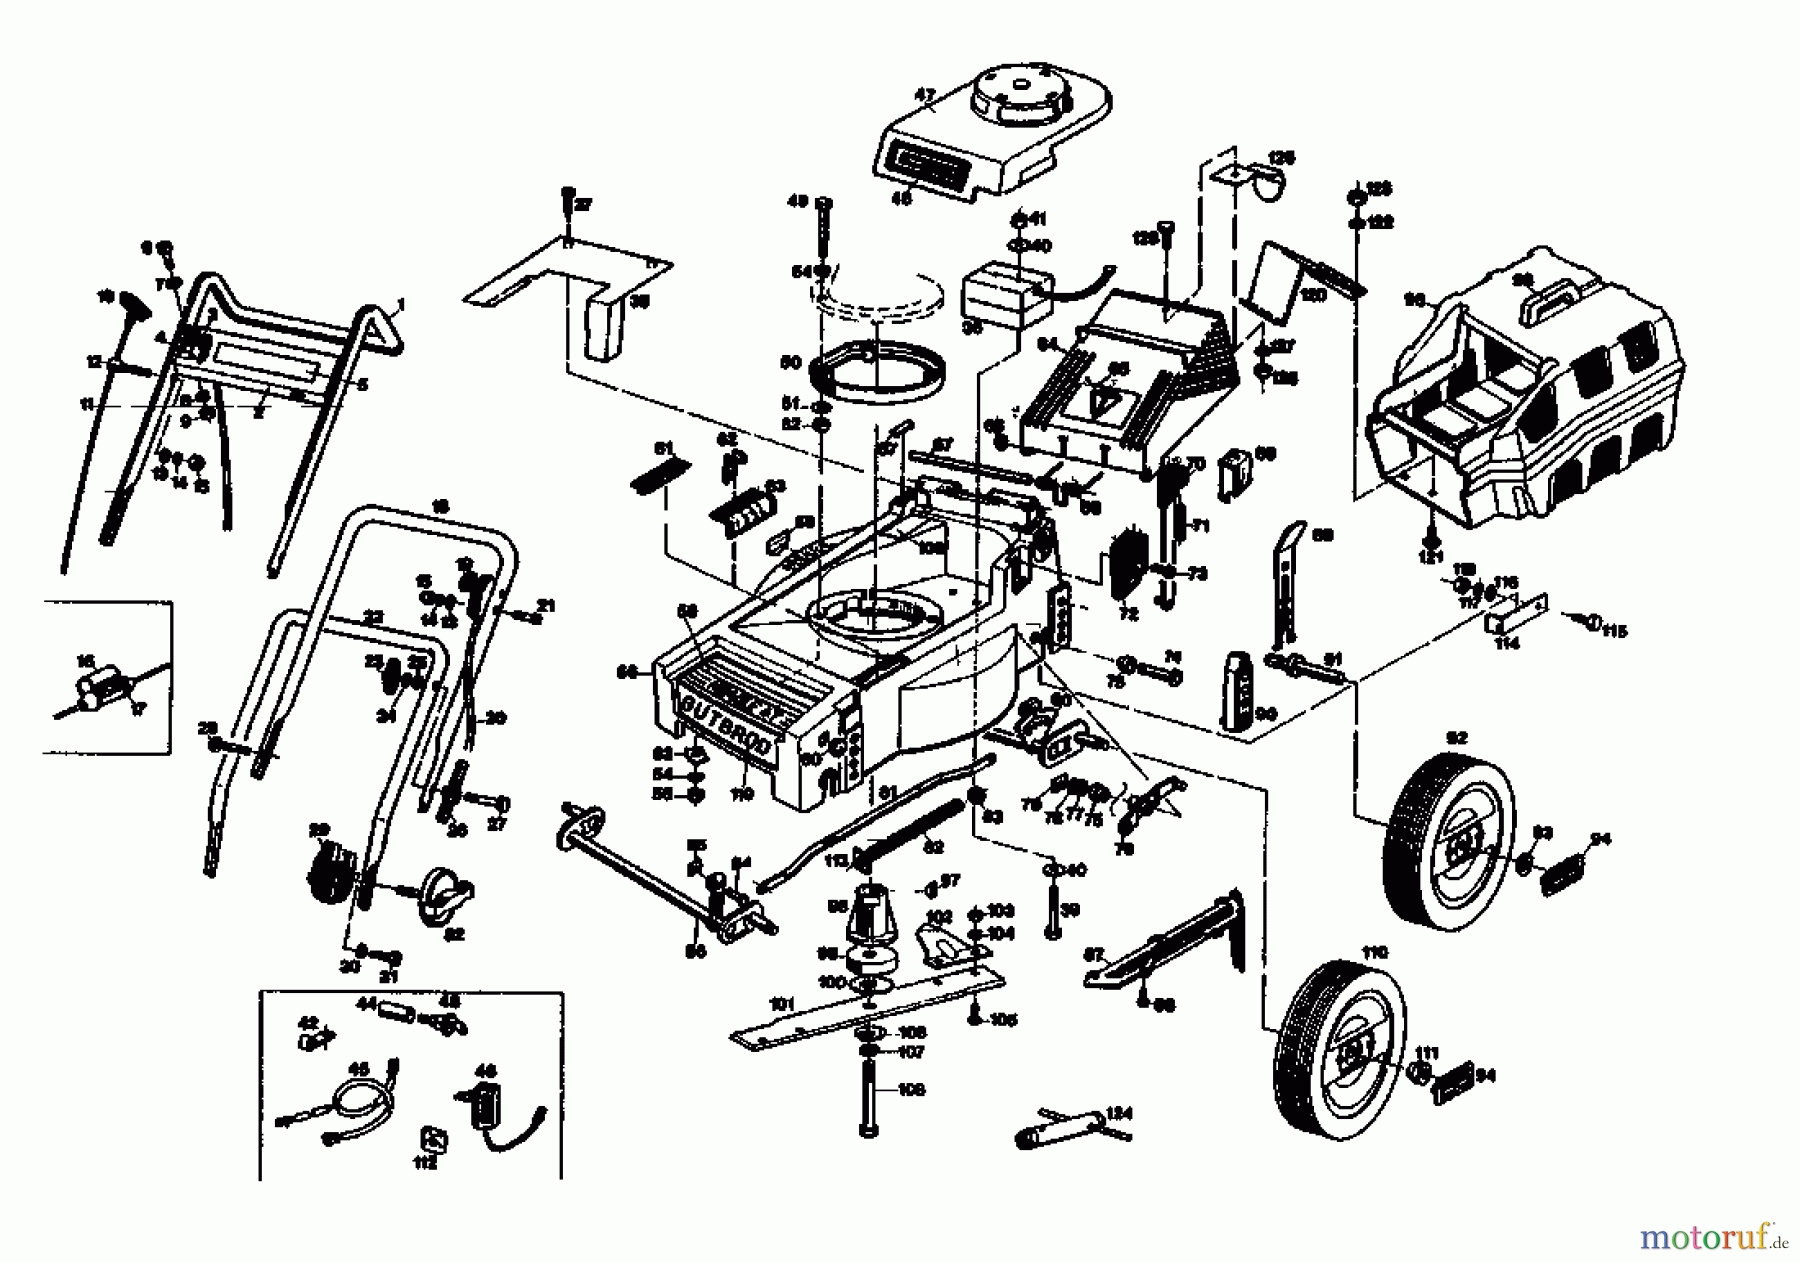  Gutbrod Petrol mower HB 40 LBS 02896.05  (1987) Basic machine